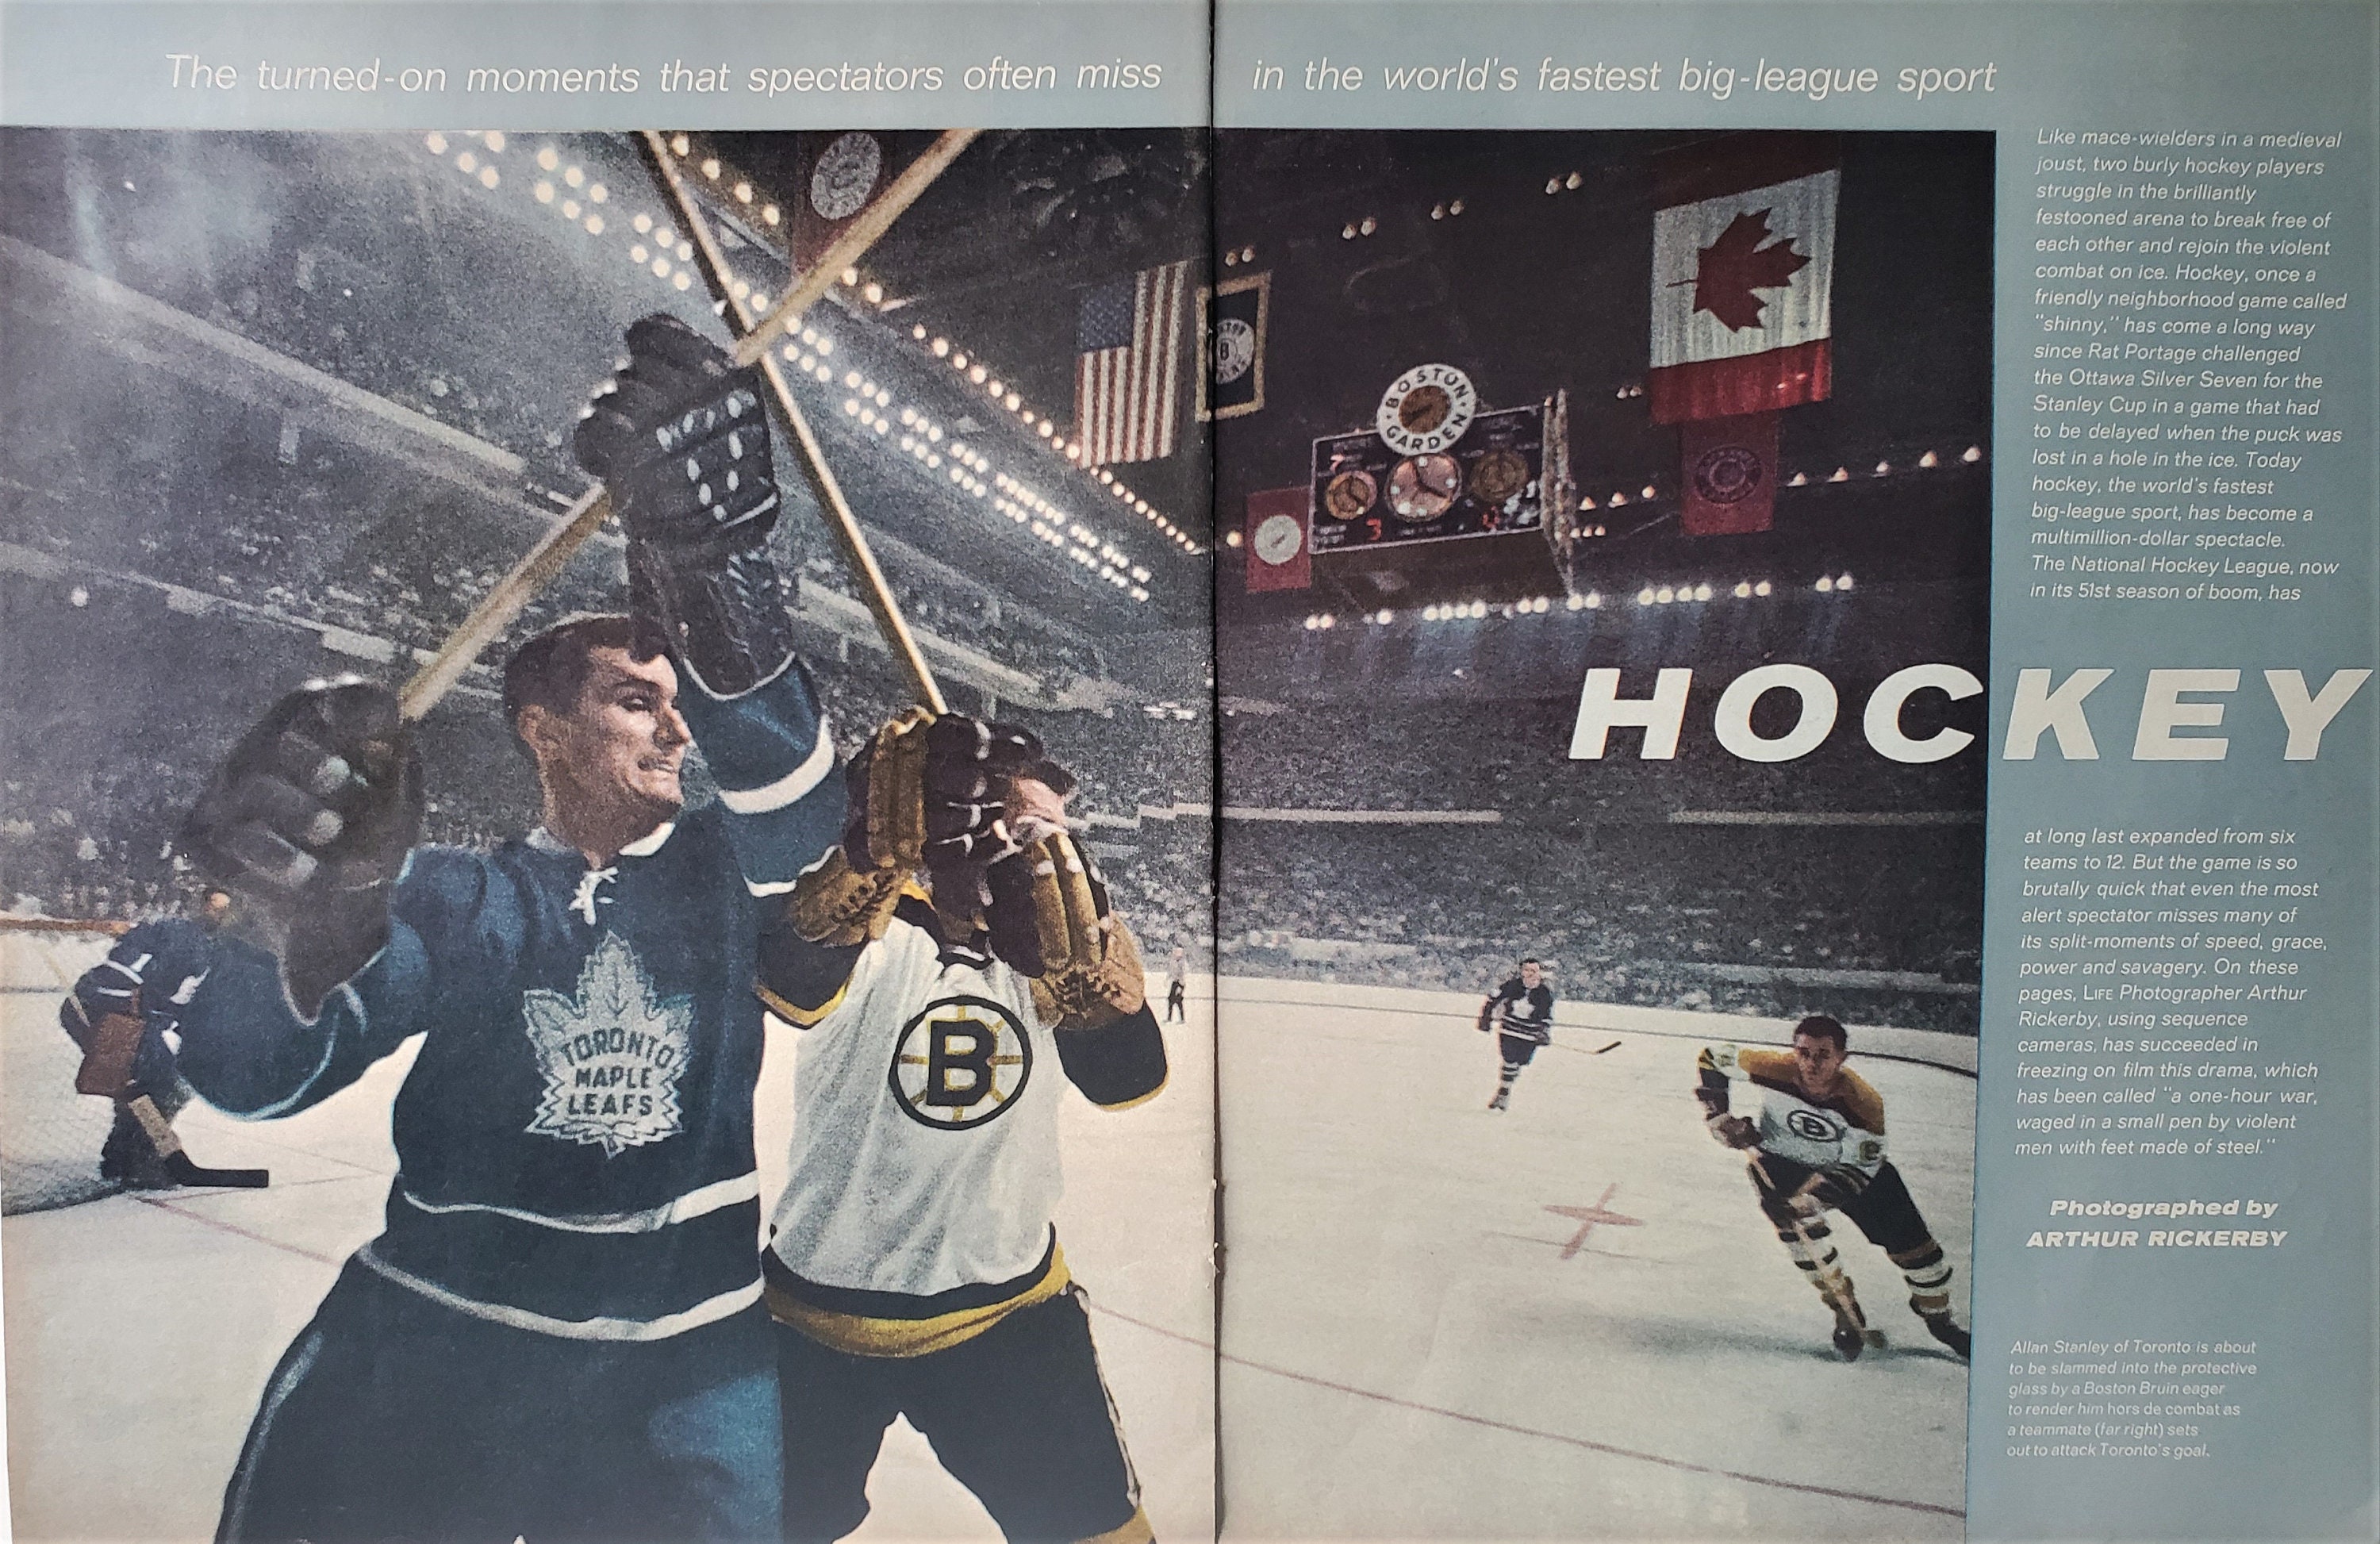 NHL History of Team Logos Wall Art Post - 8x10 Color Photo